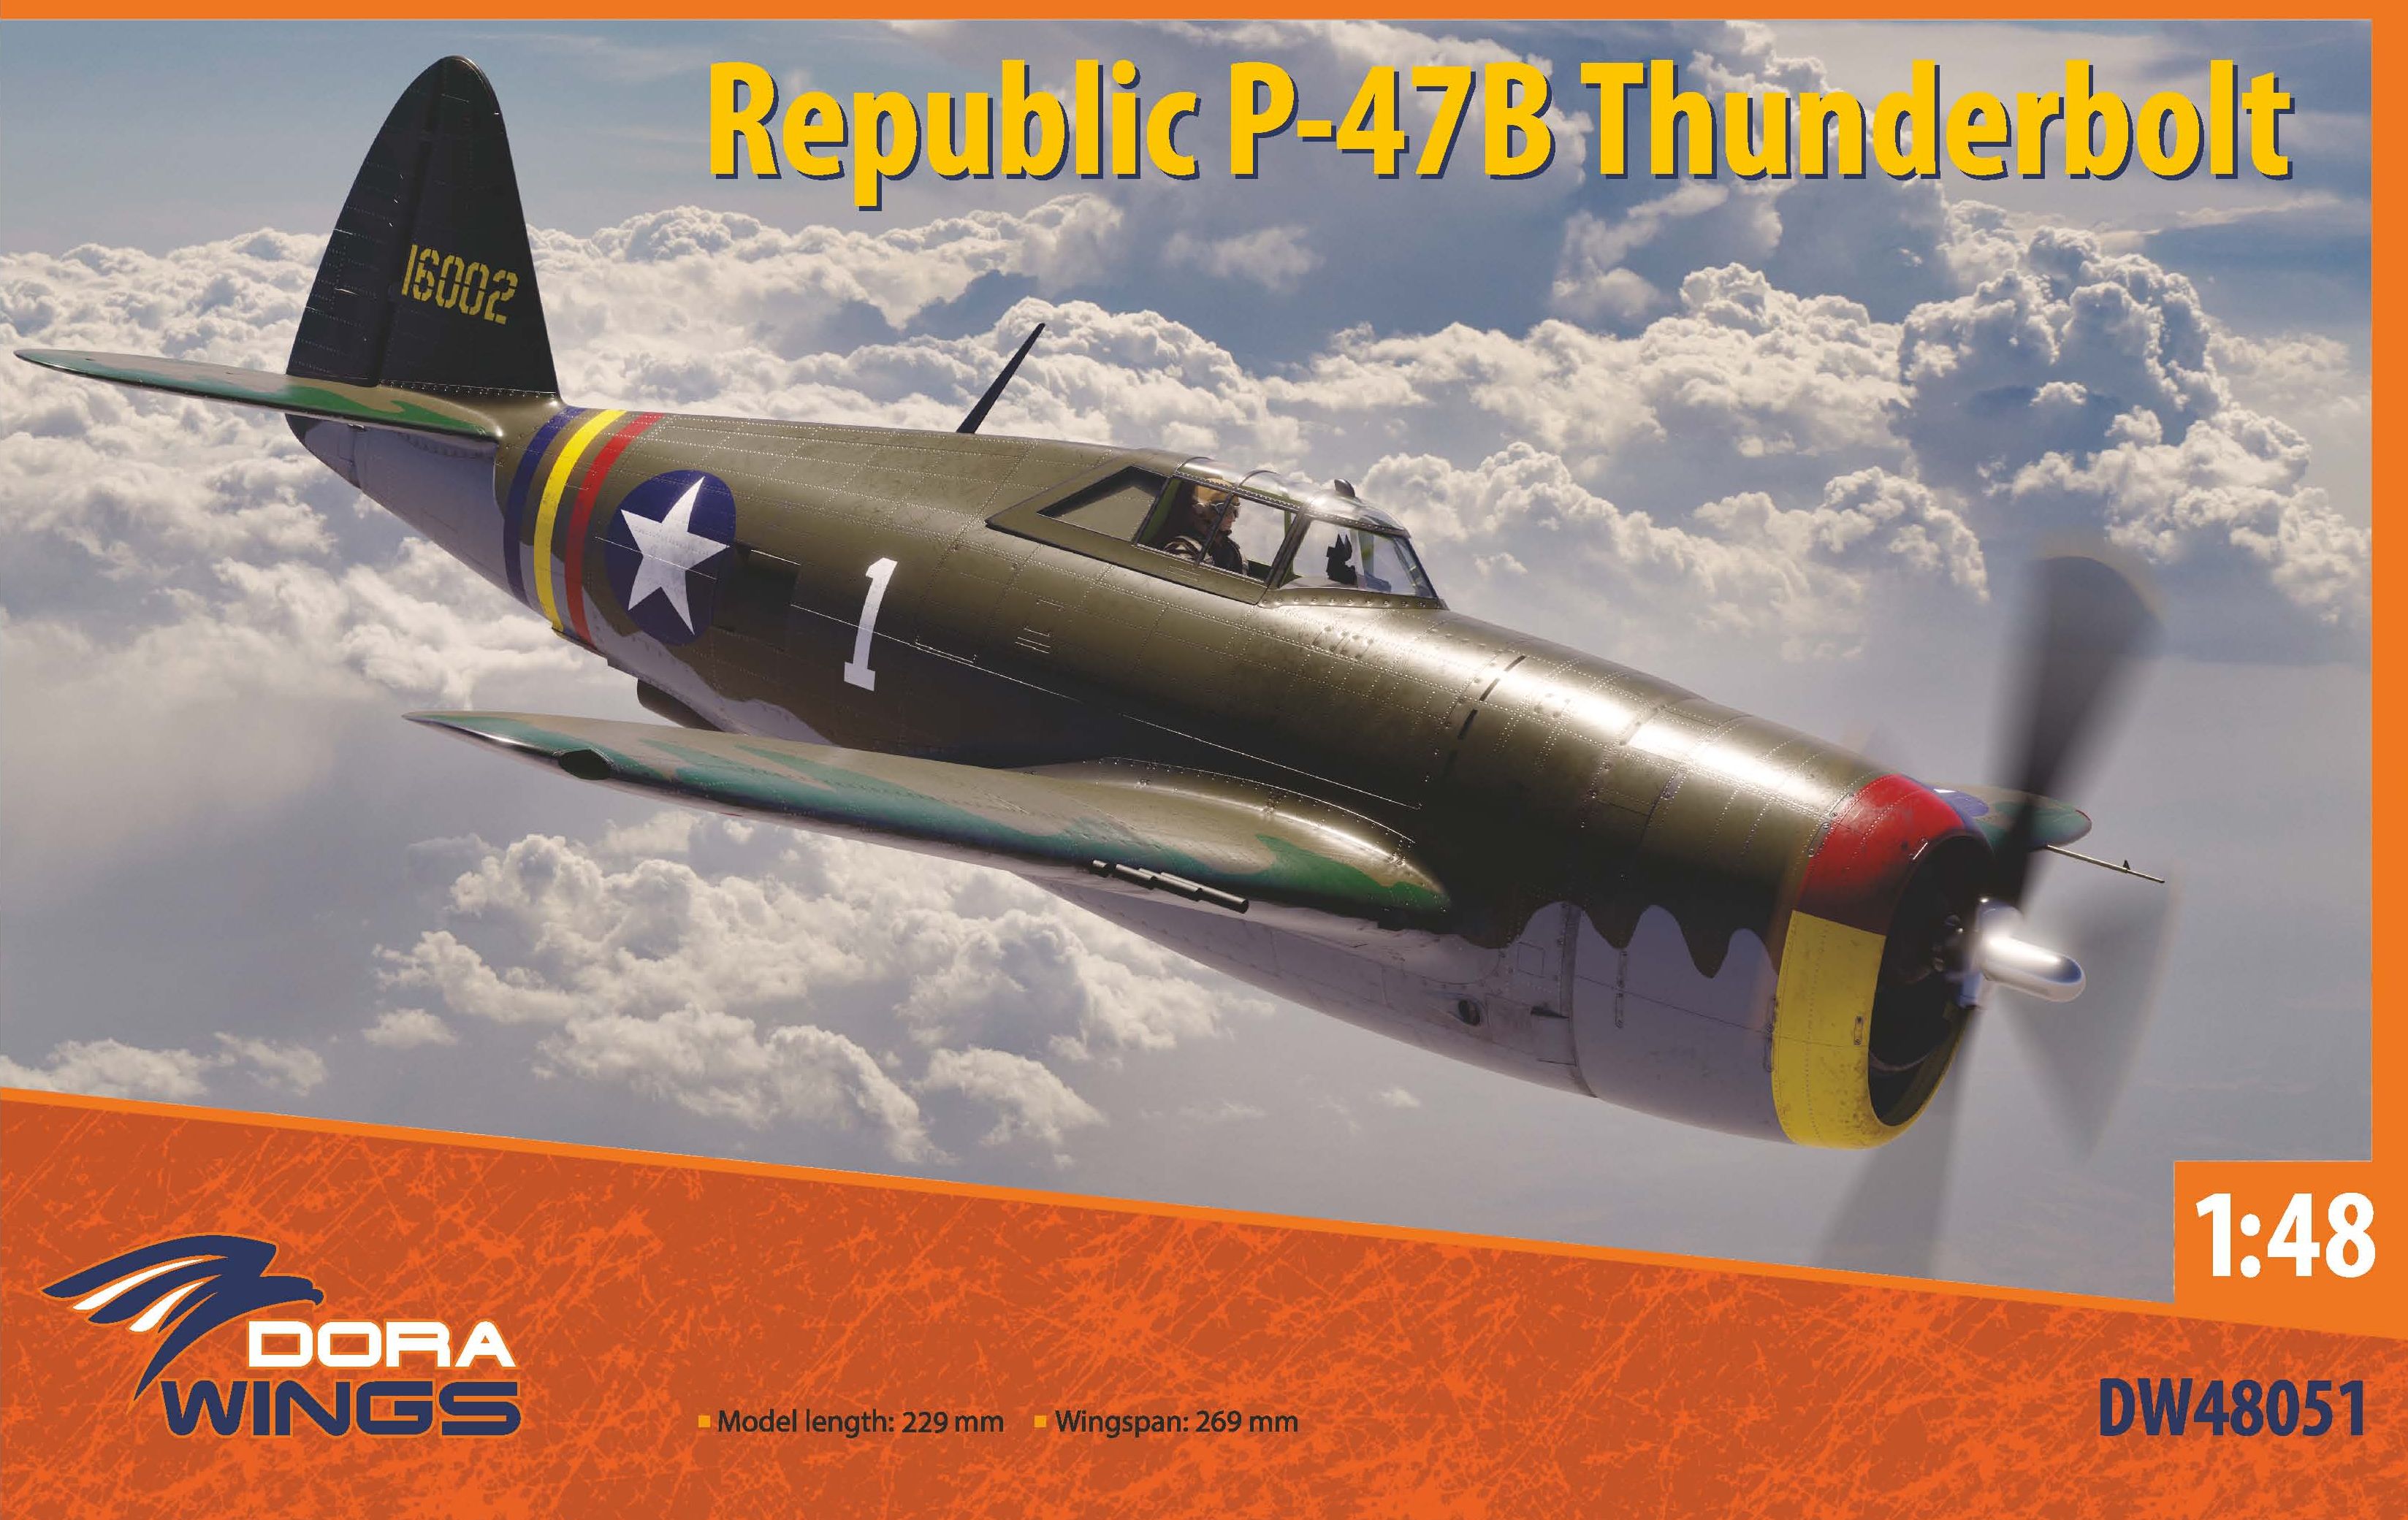 Republic P-47B Thunderbolt (DW48051)